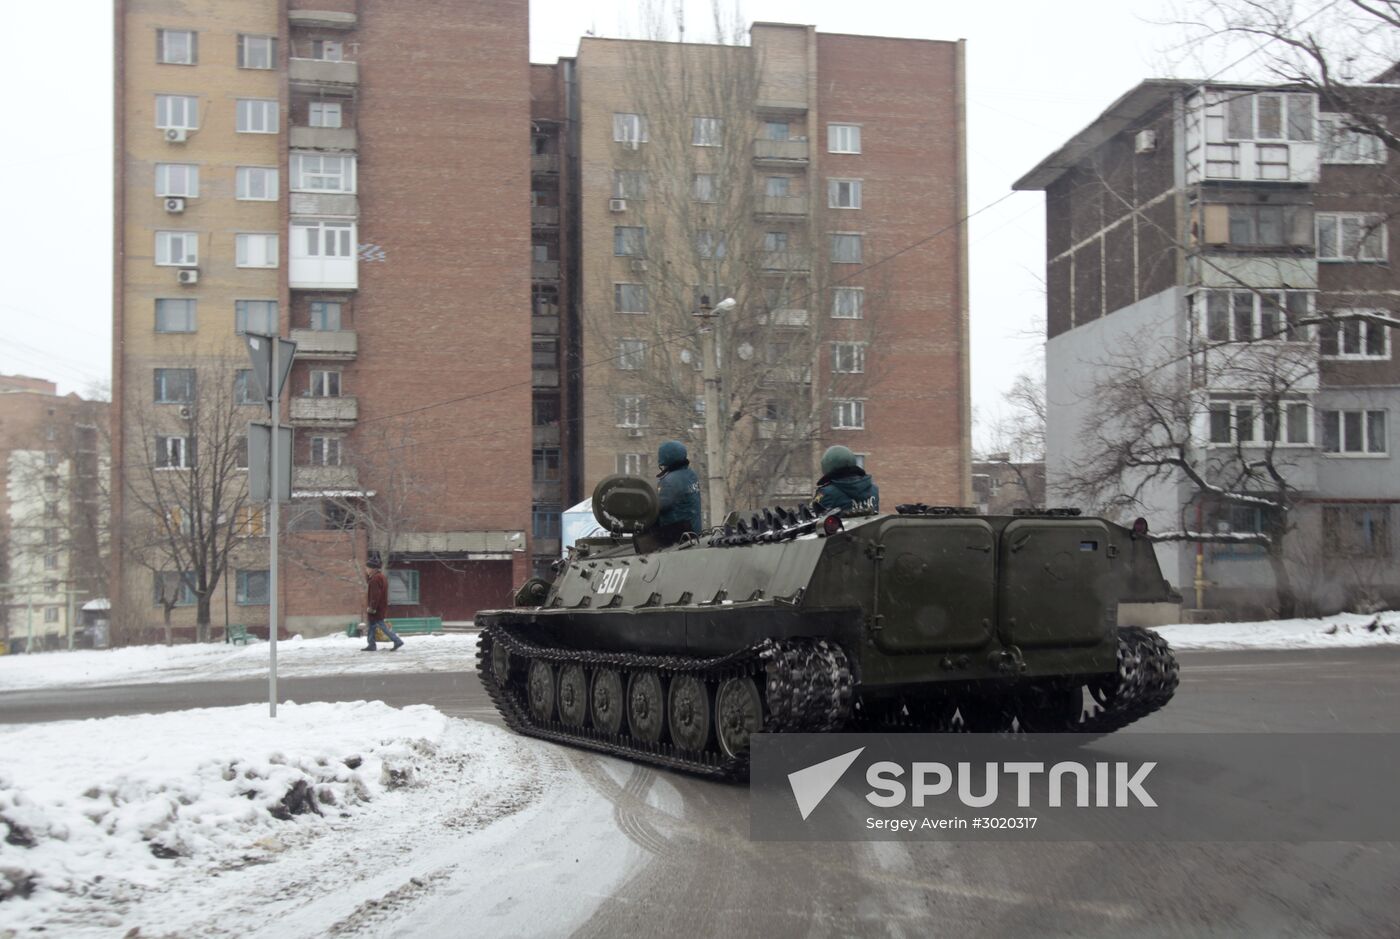 Civilians evacuated from Donetsk